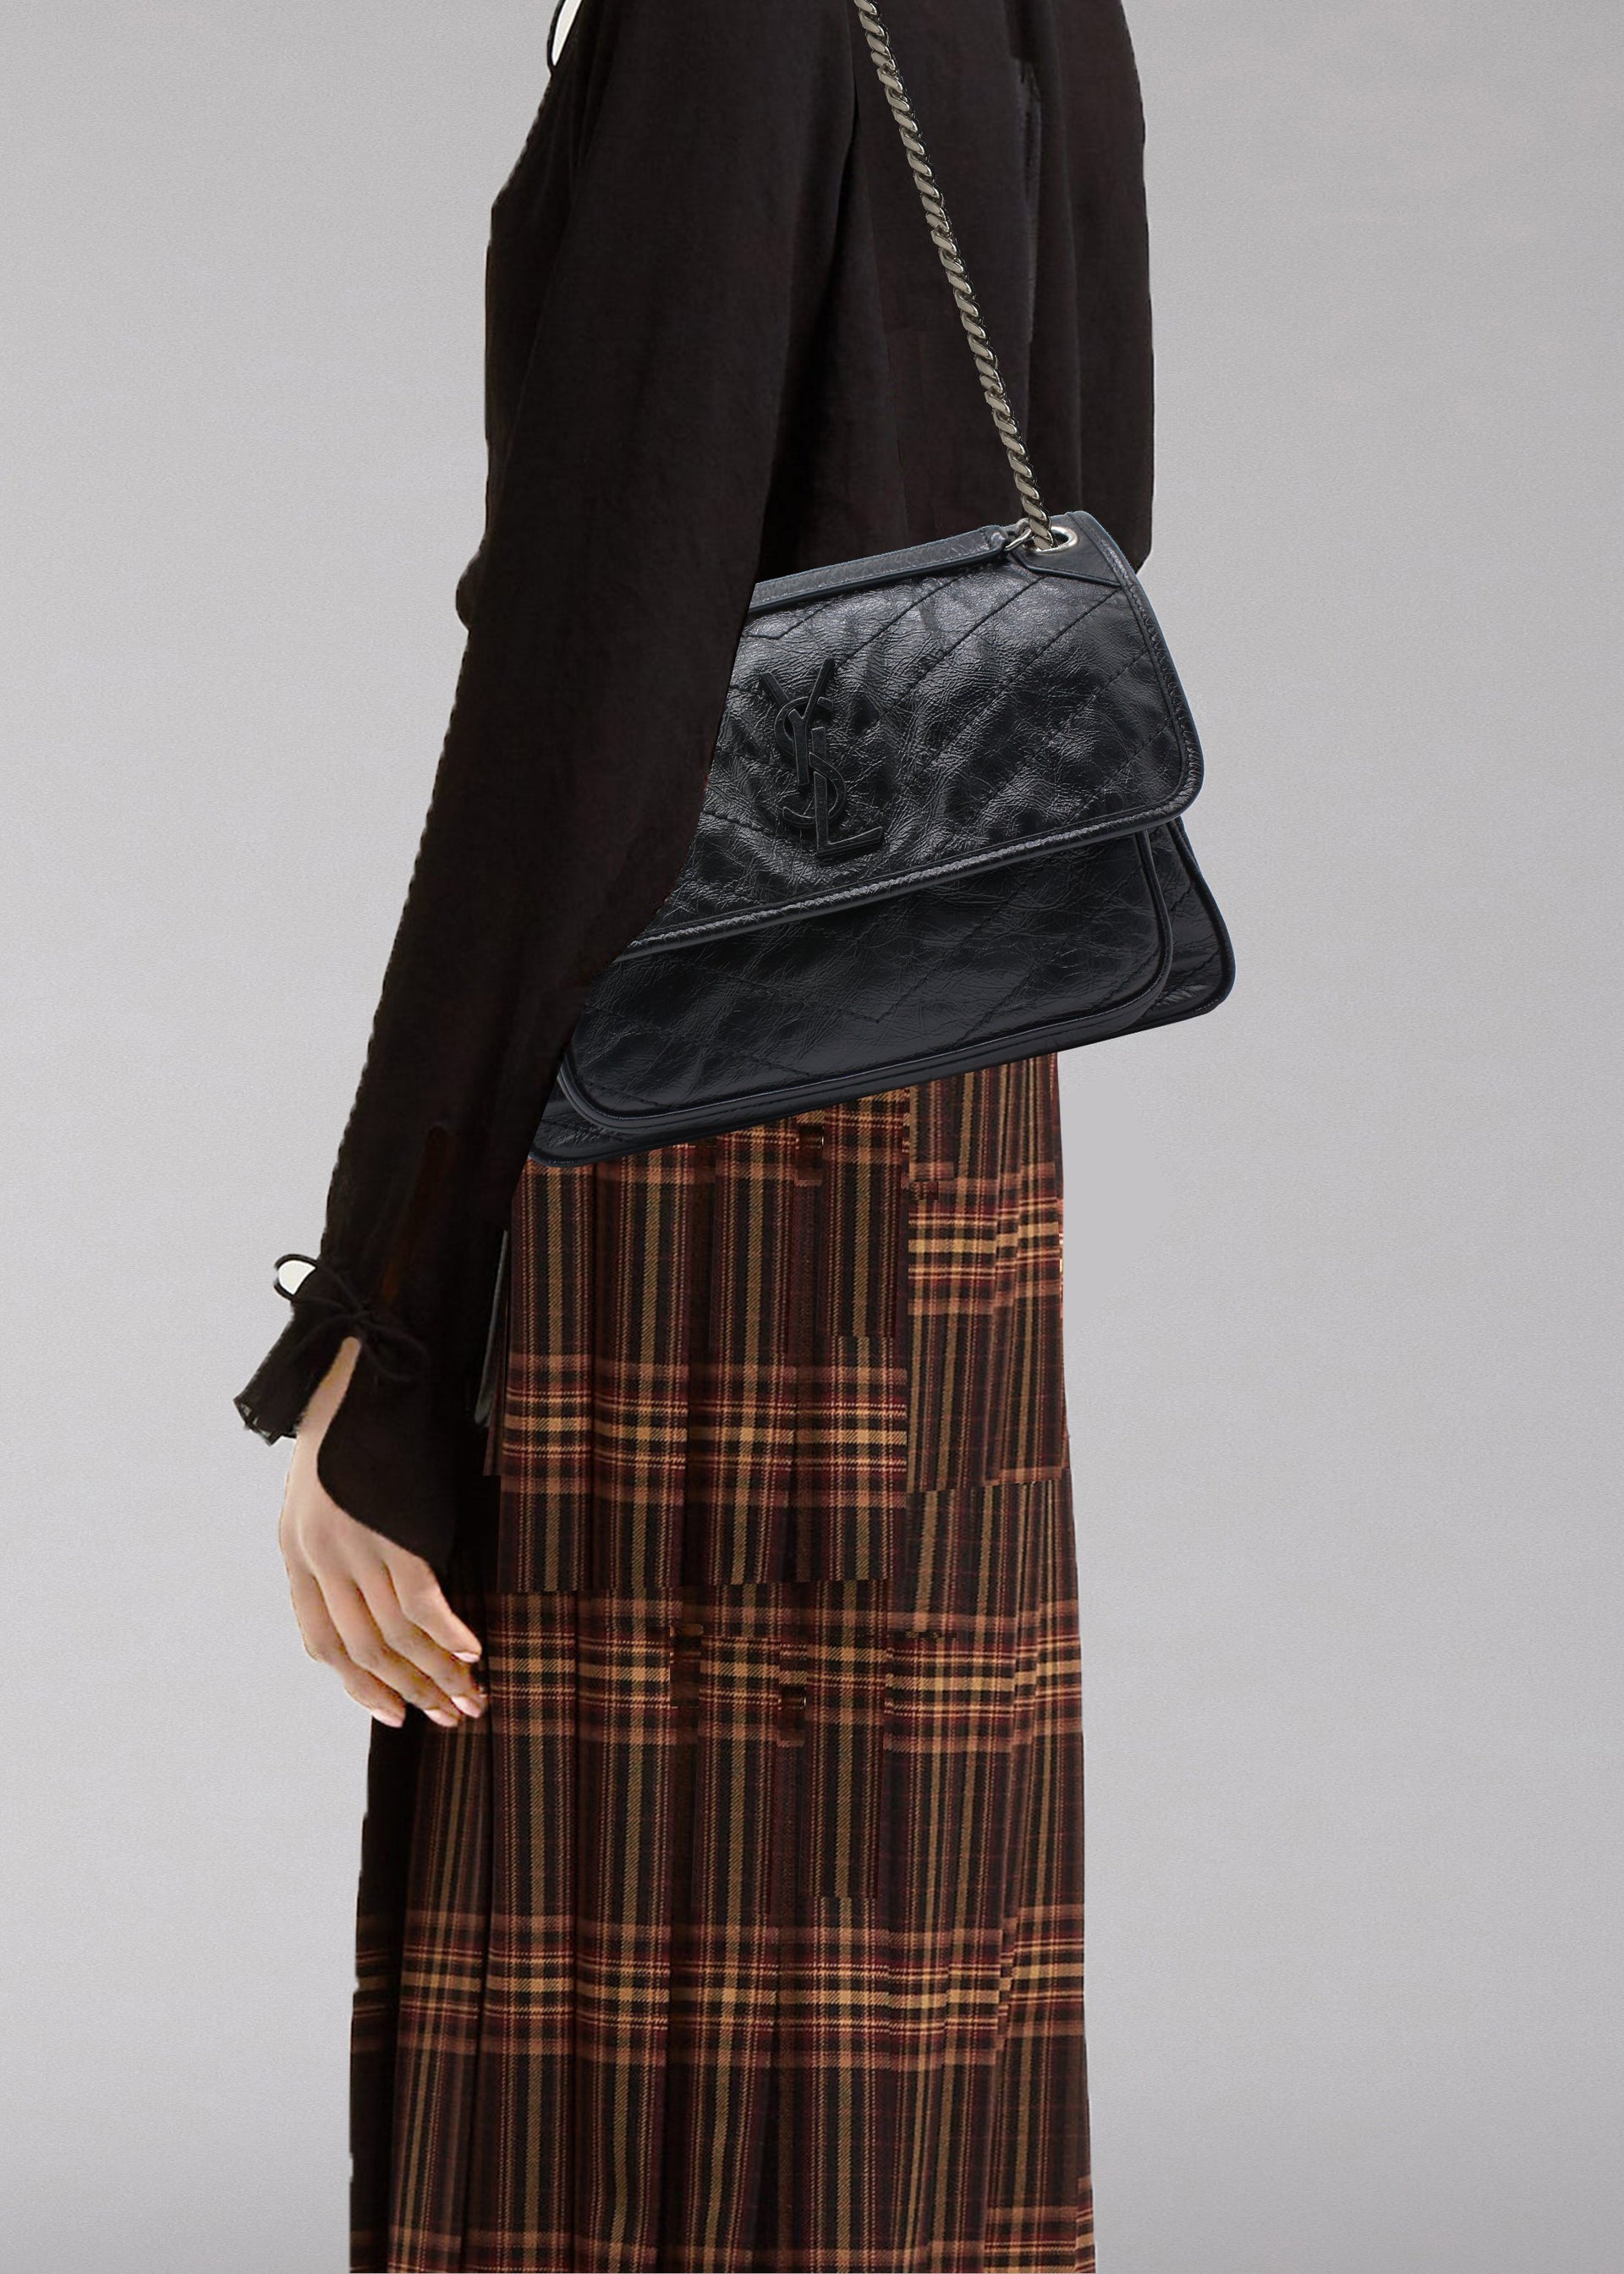 Saint Laurent Black Niki Medium Leather Shoulder Bag